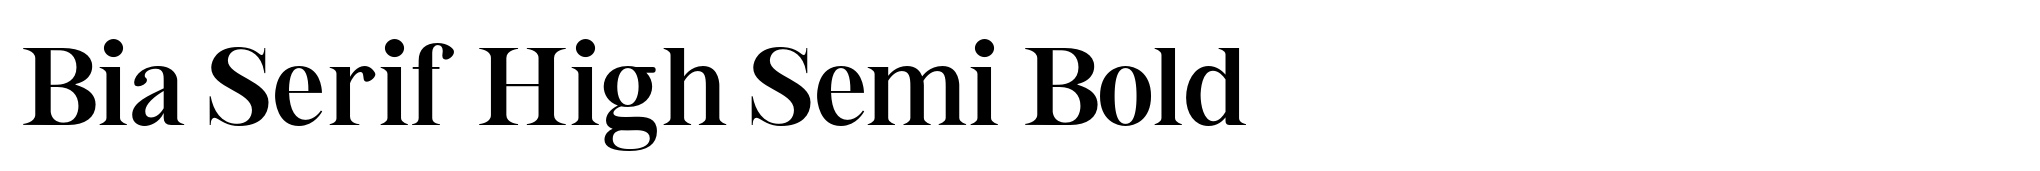 Bia Serif High Semi Bold image